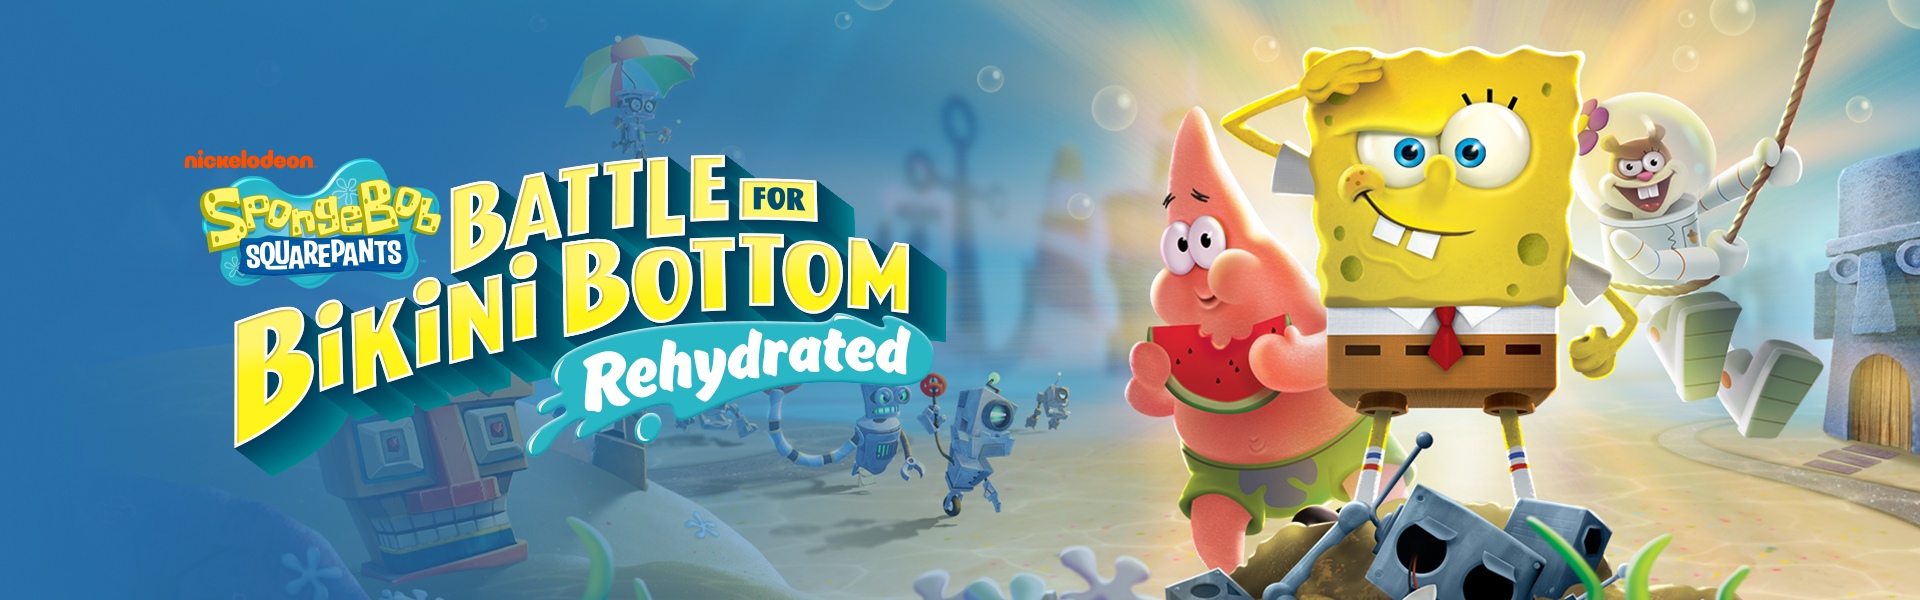 SpongeBob SquarePants: - GmbH Rehydrated | Bottom THQ for Bikini Battle Nordic